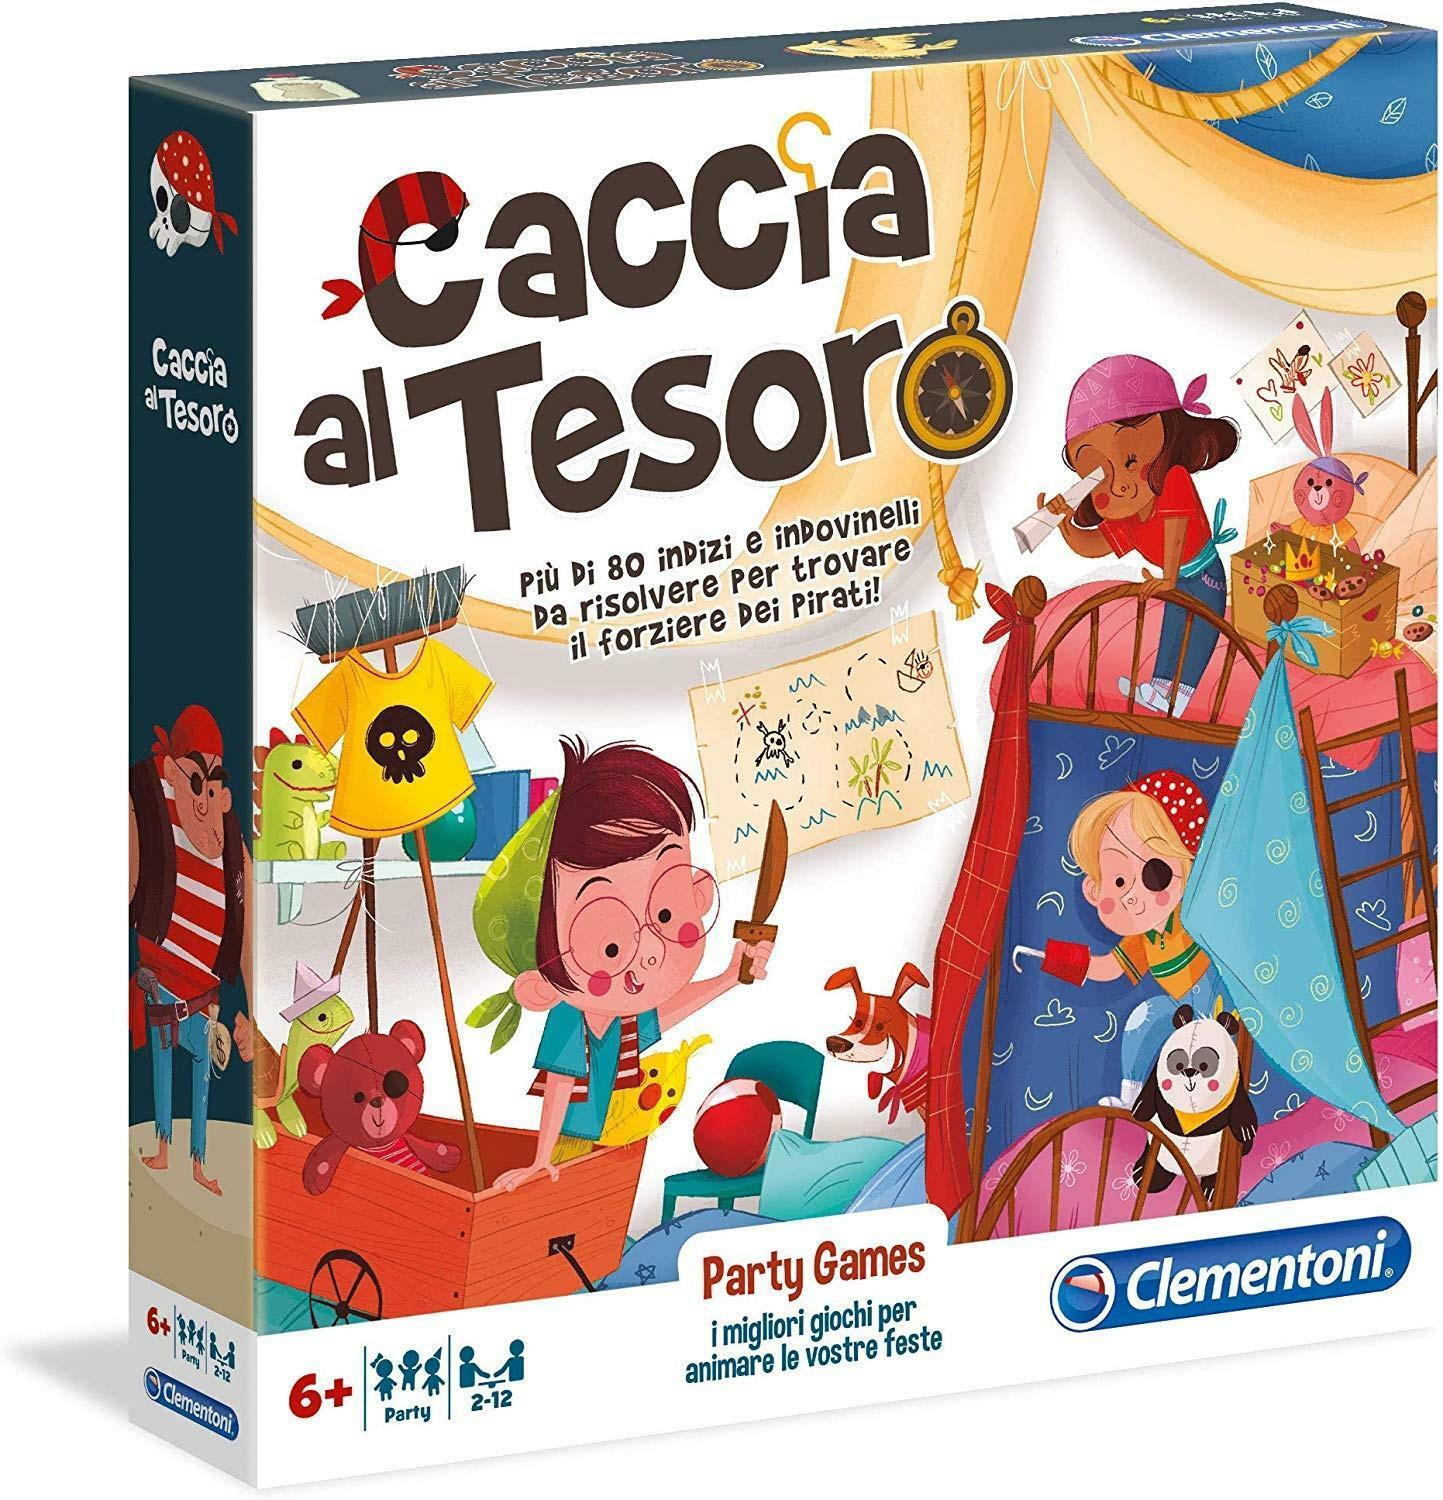 clementoni party games - caccia al tesoro 16153